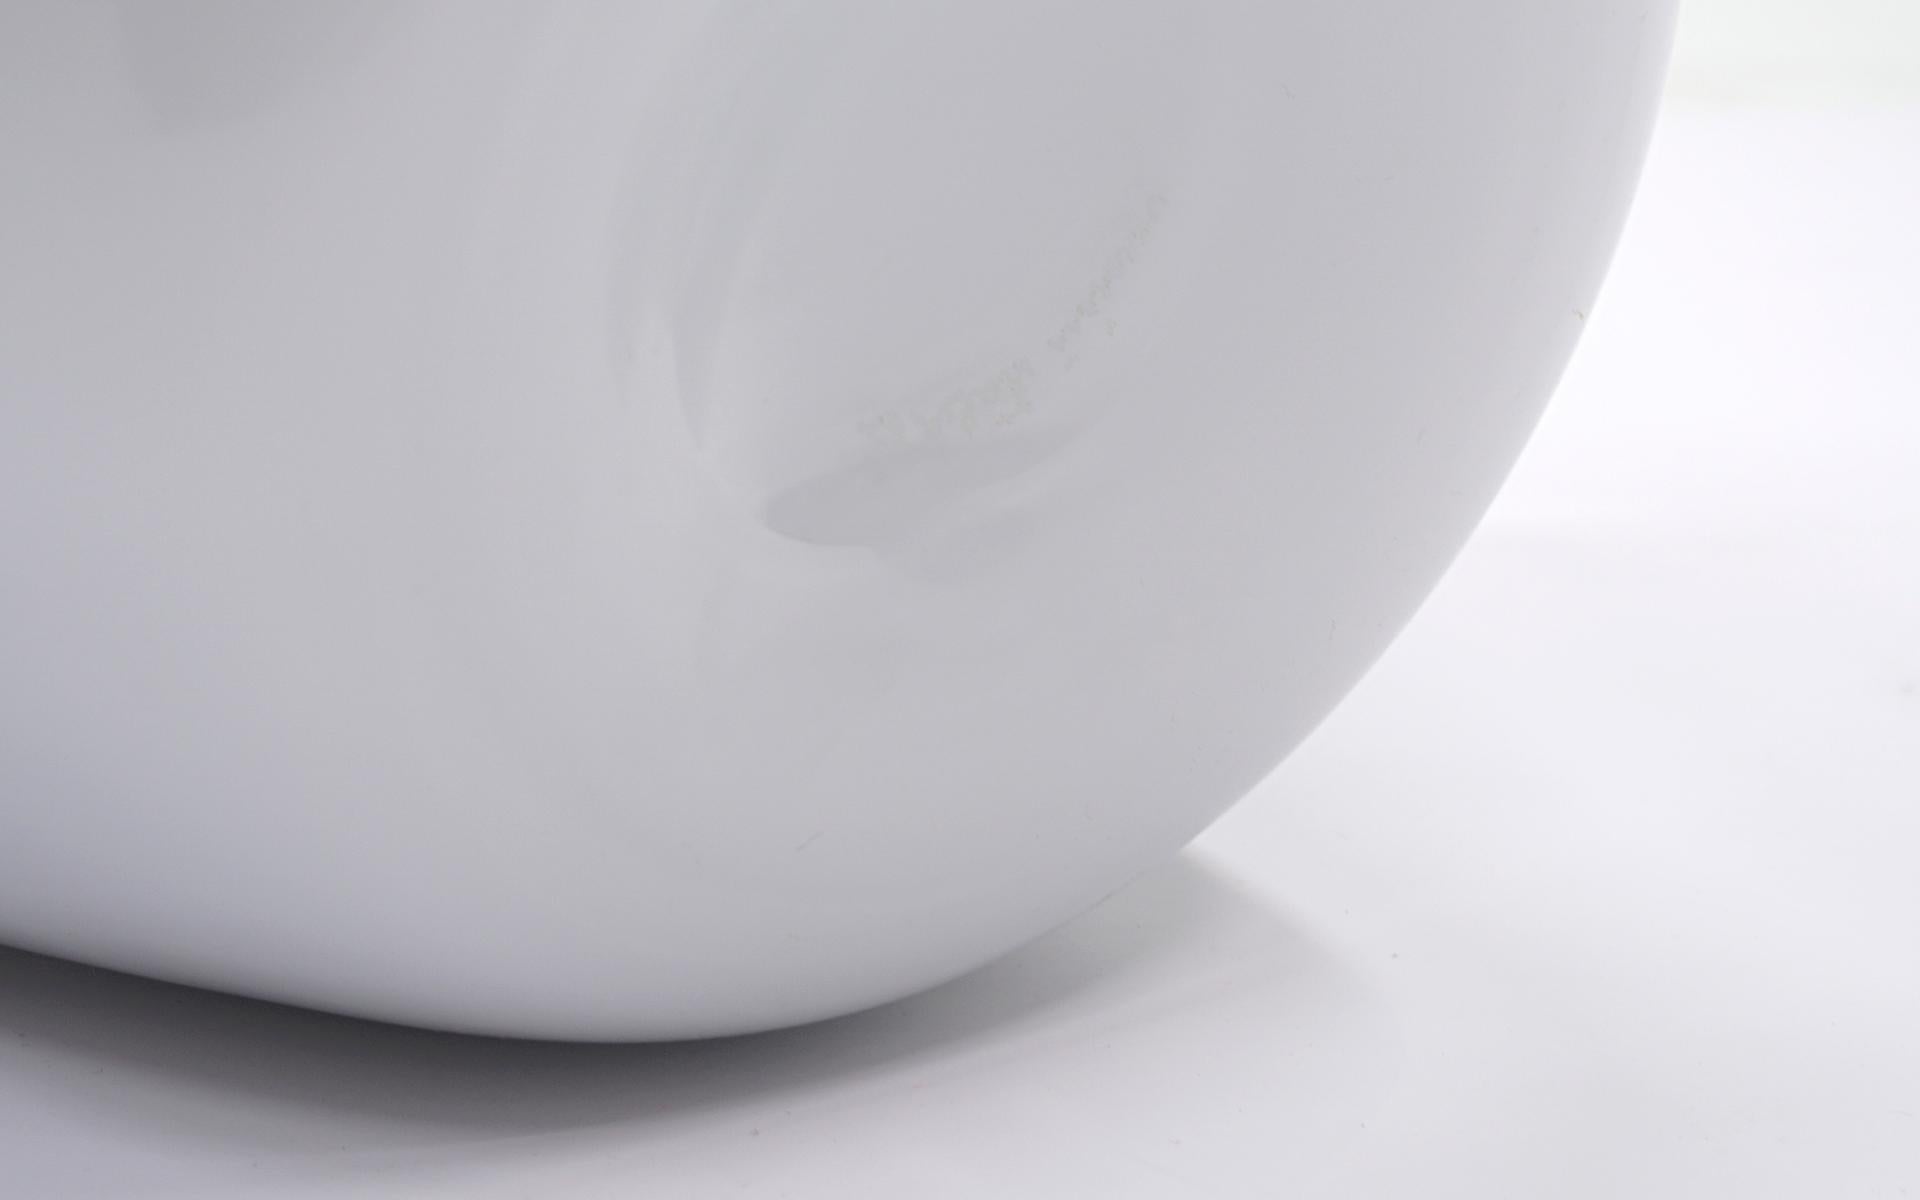 Art Glass Large Venini Hankerchief Artglass / Glass Bowl / Vase, Almost Black and White